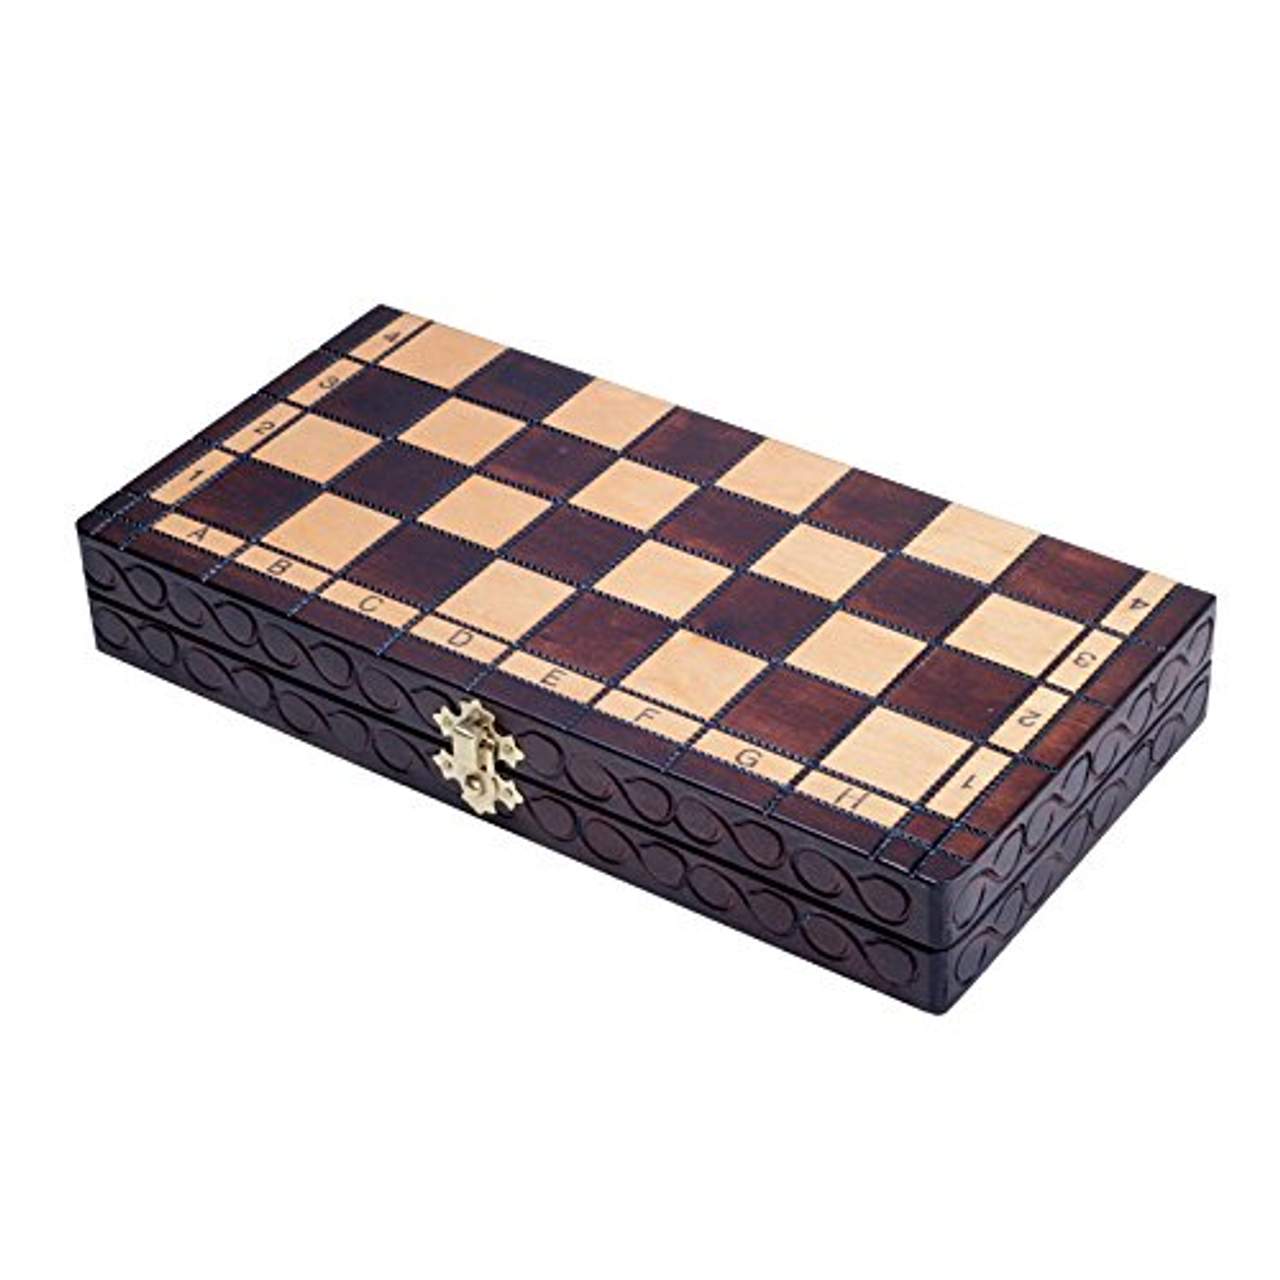 KADAX Schachspiel aus Holz